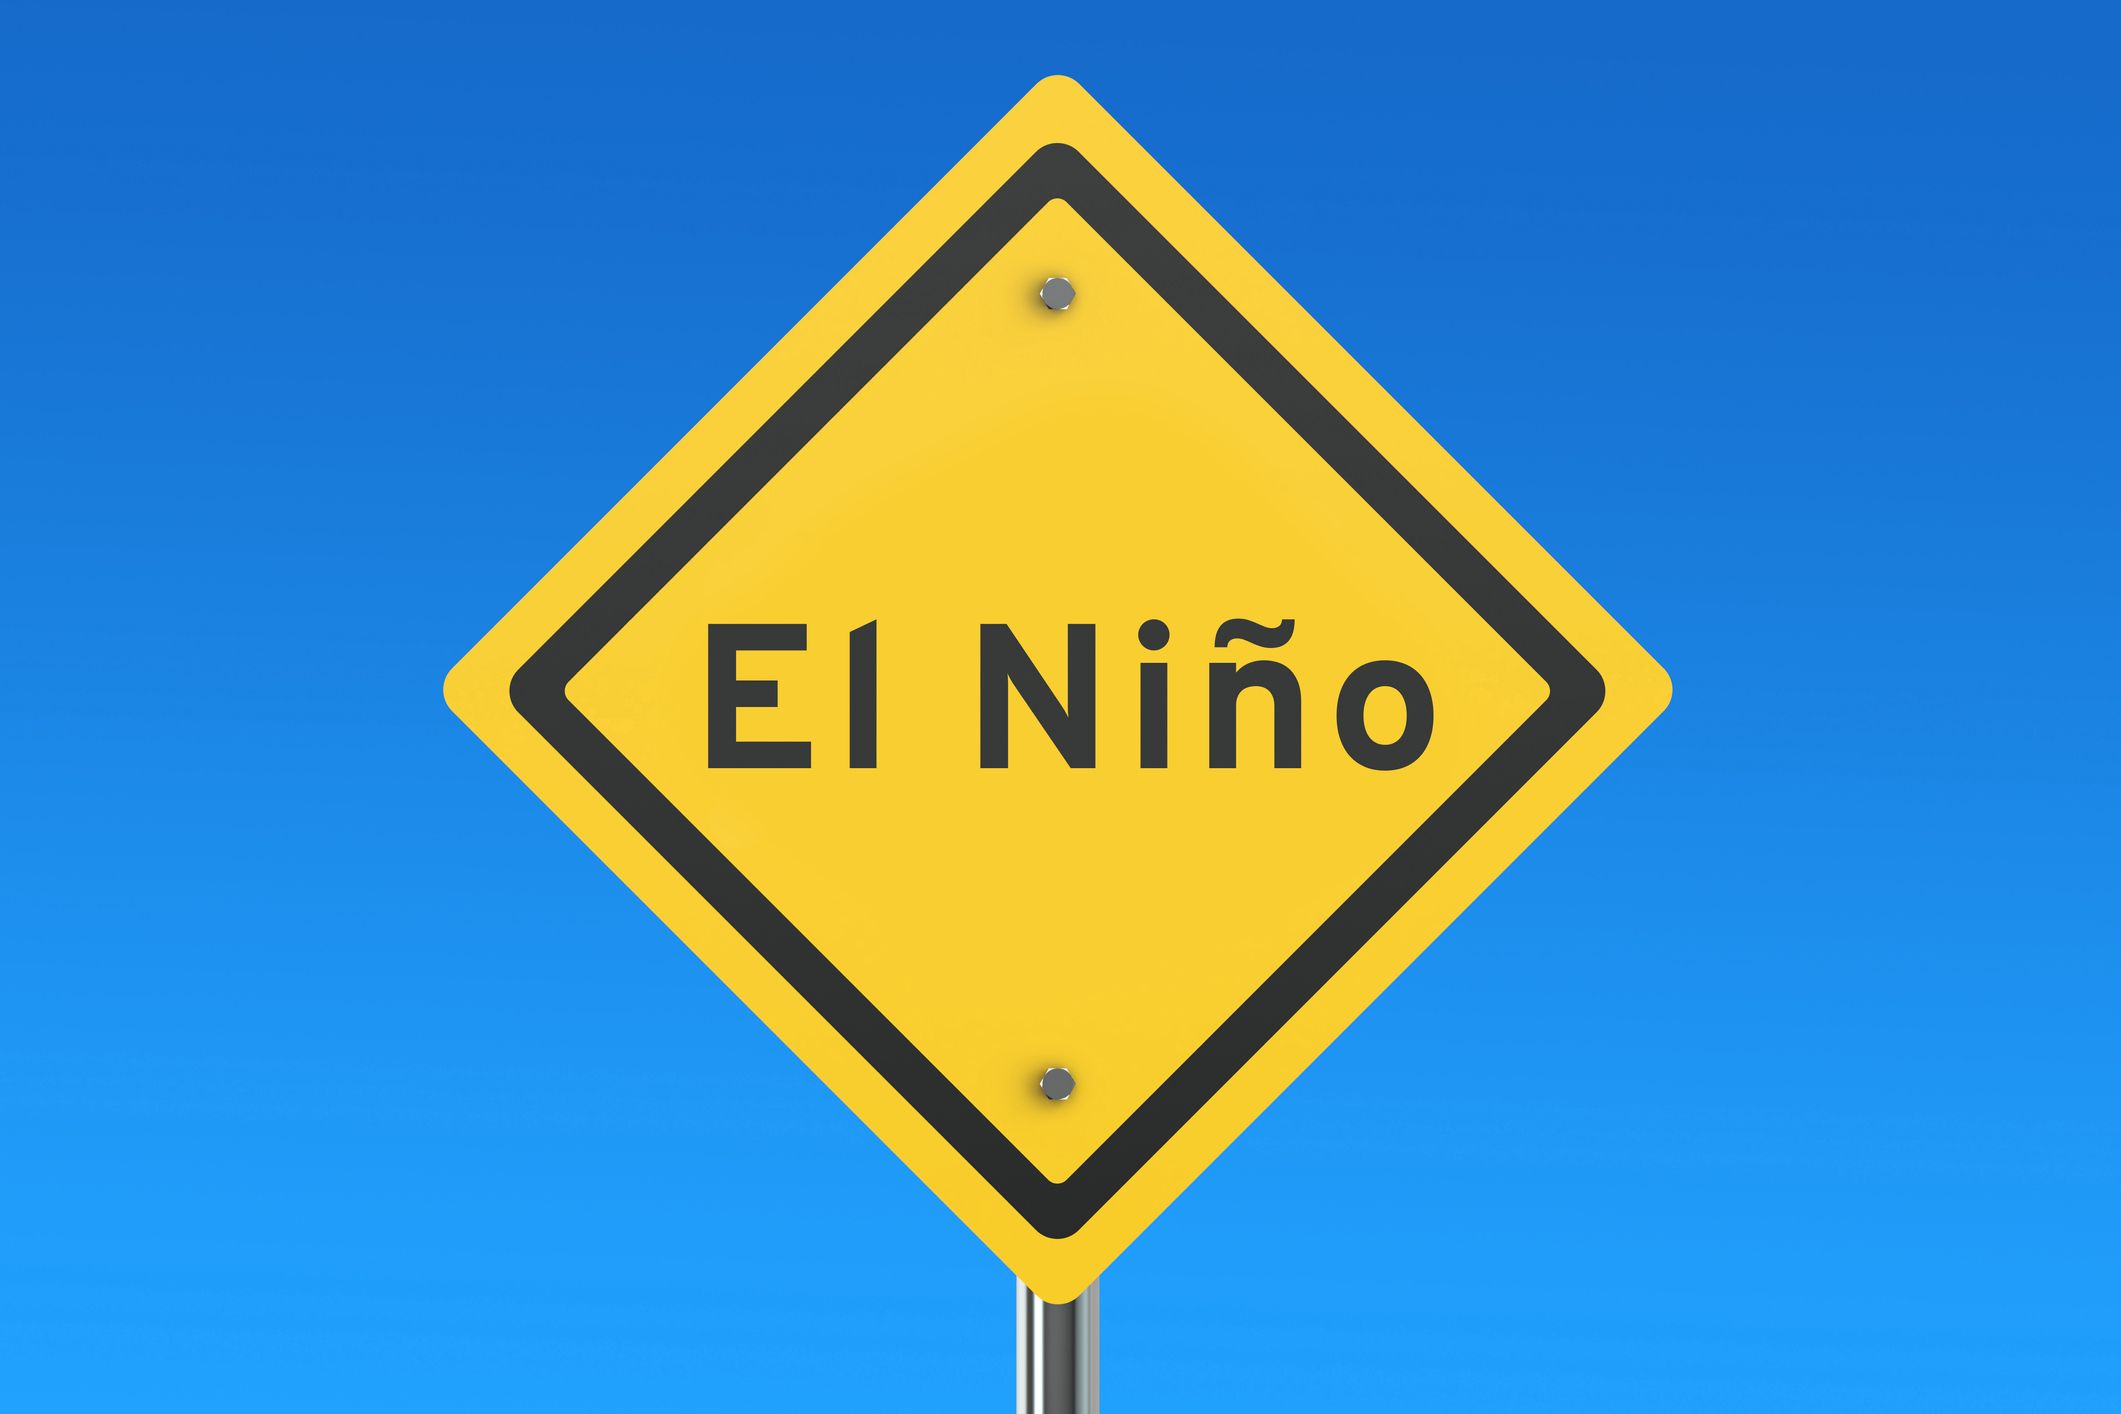 O que a chegada do El Niño significa?